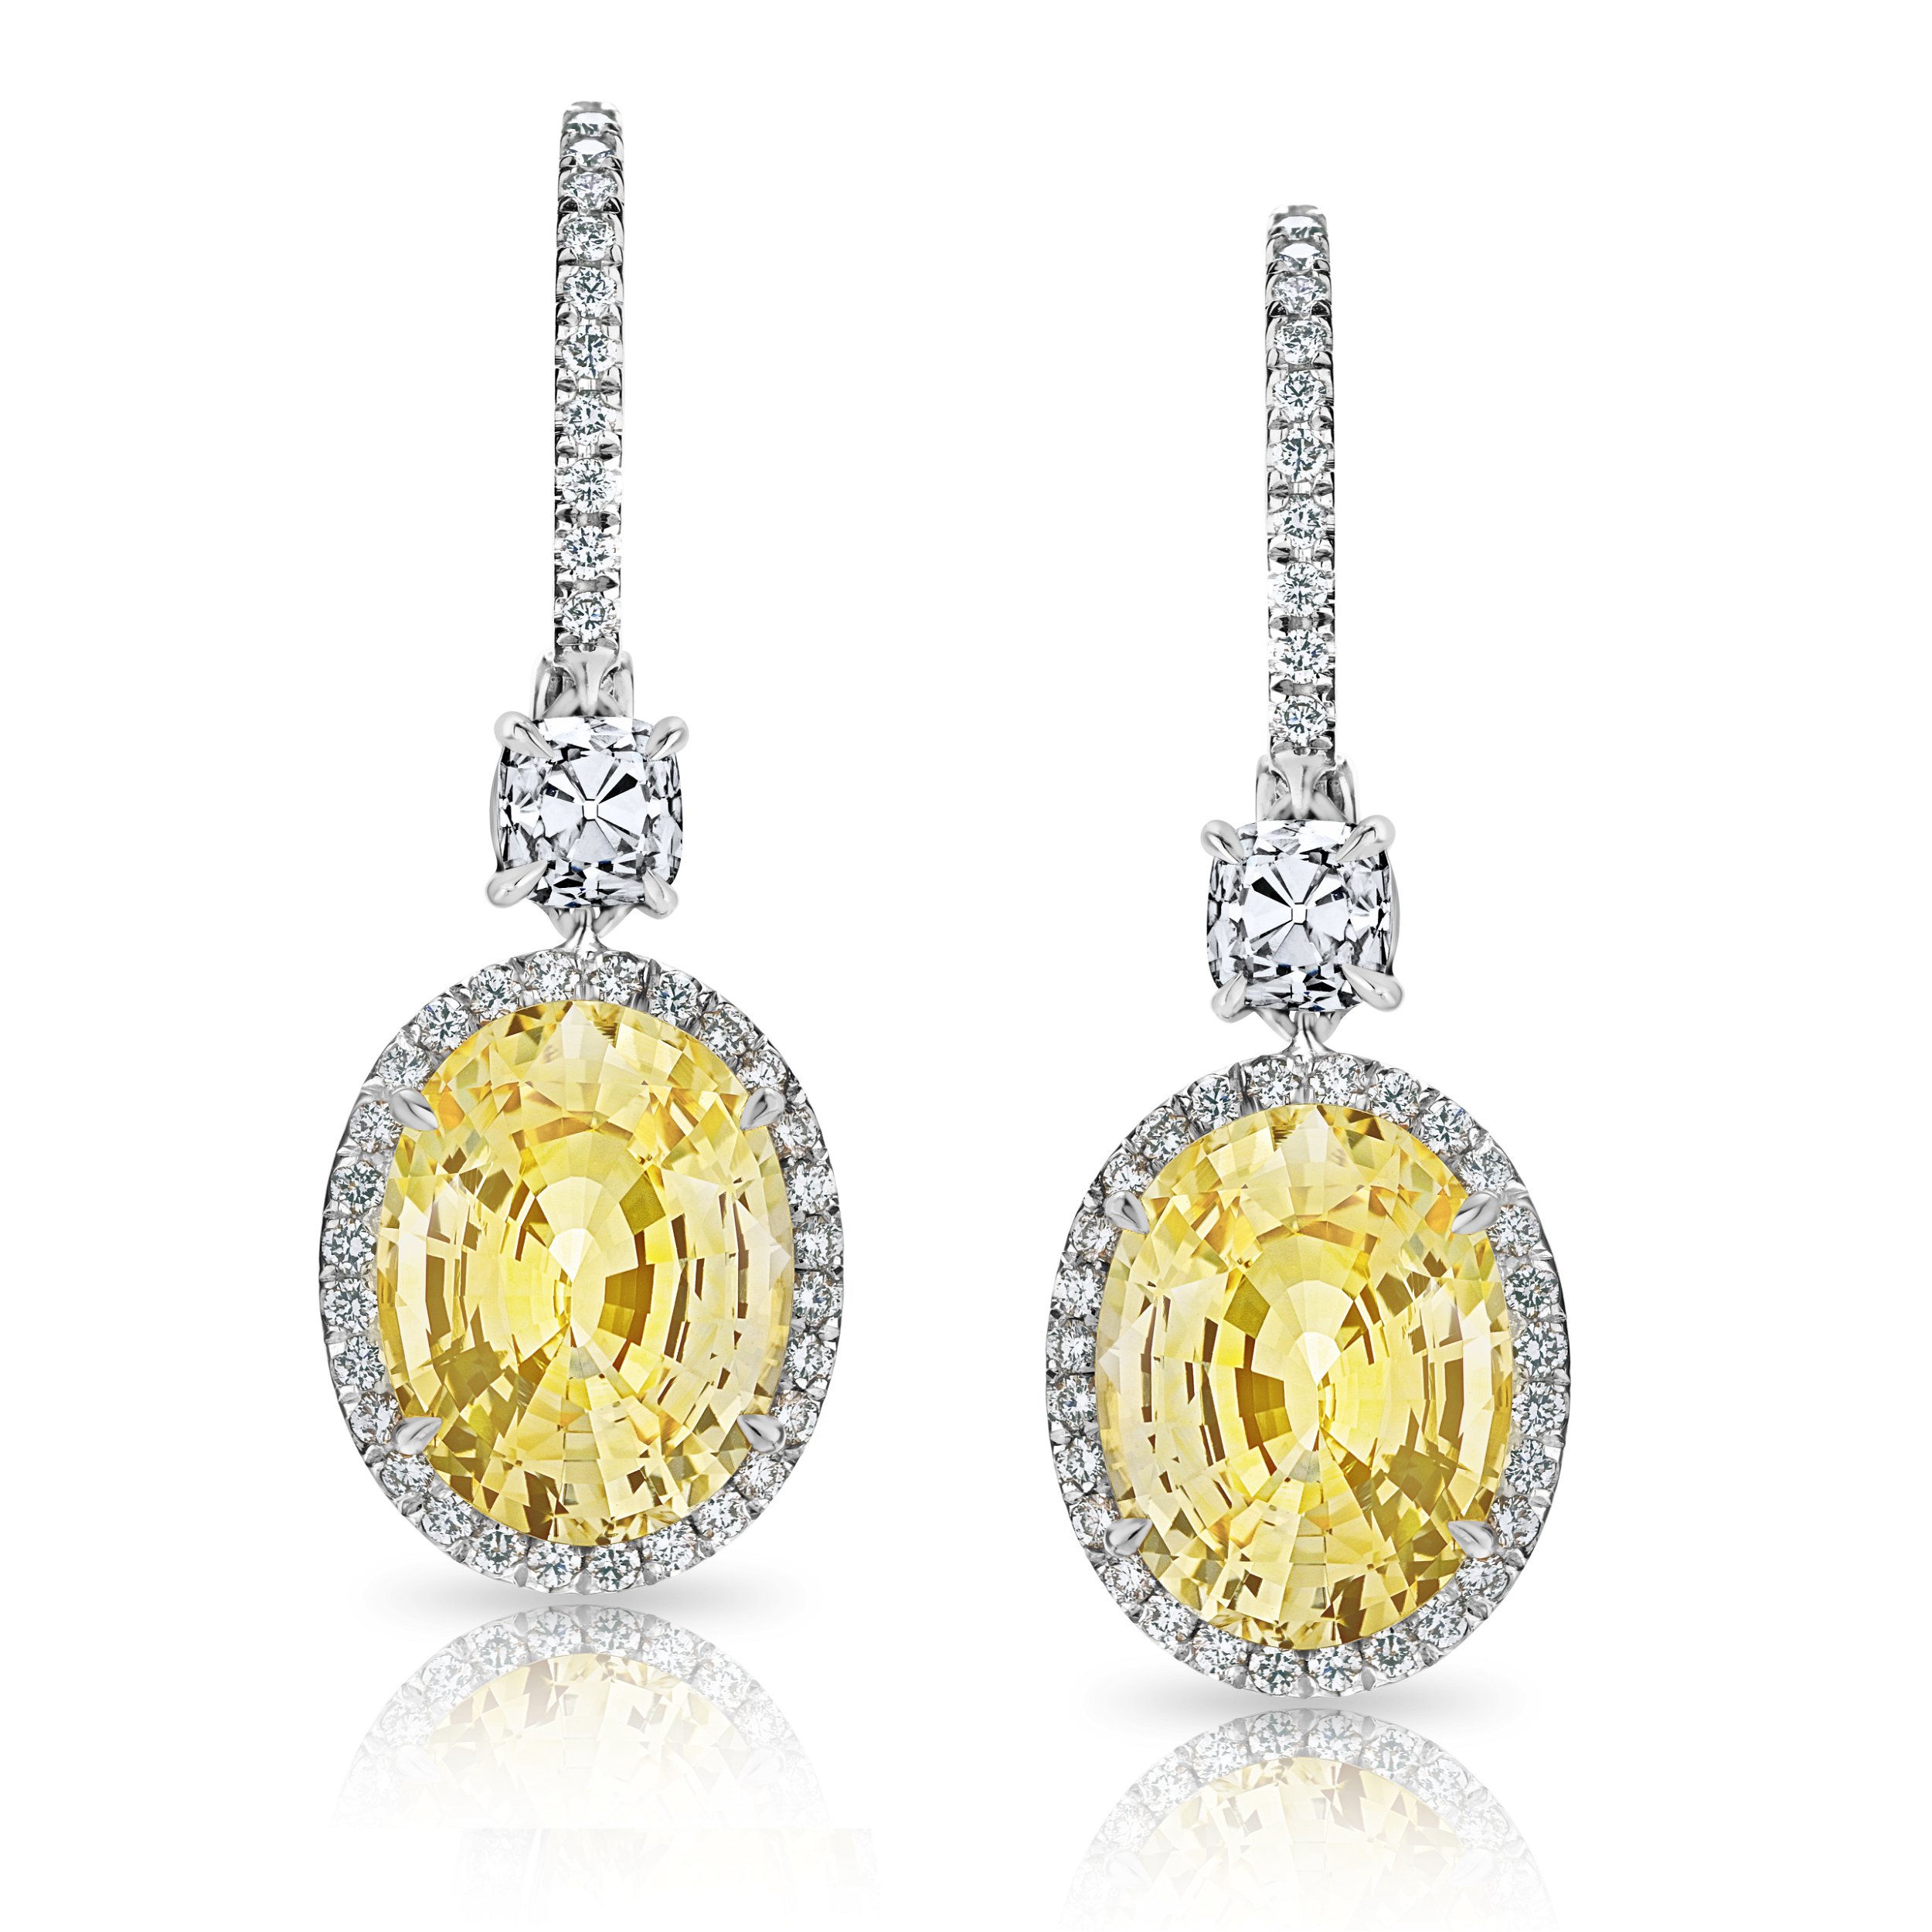 8.54 Carat Oval Yellow Sapphire With Diamonds Earrings